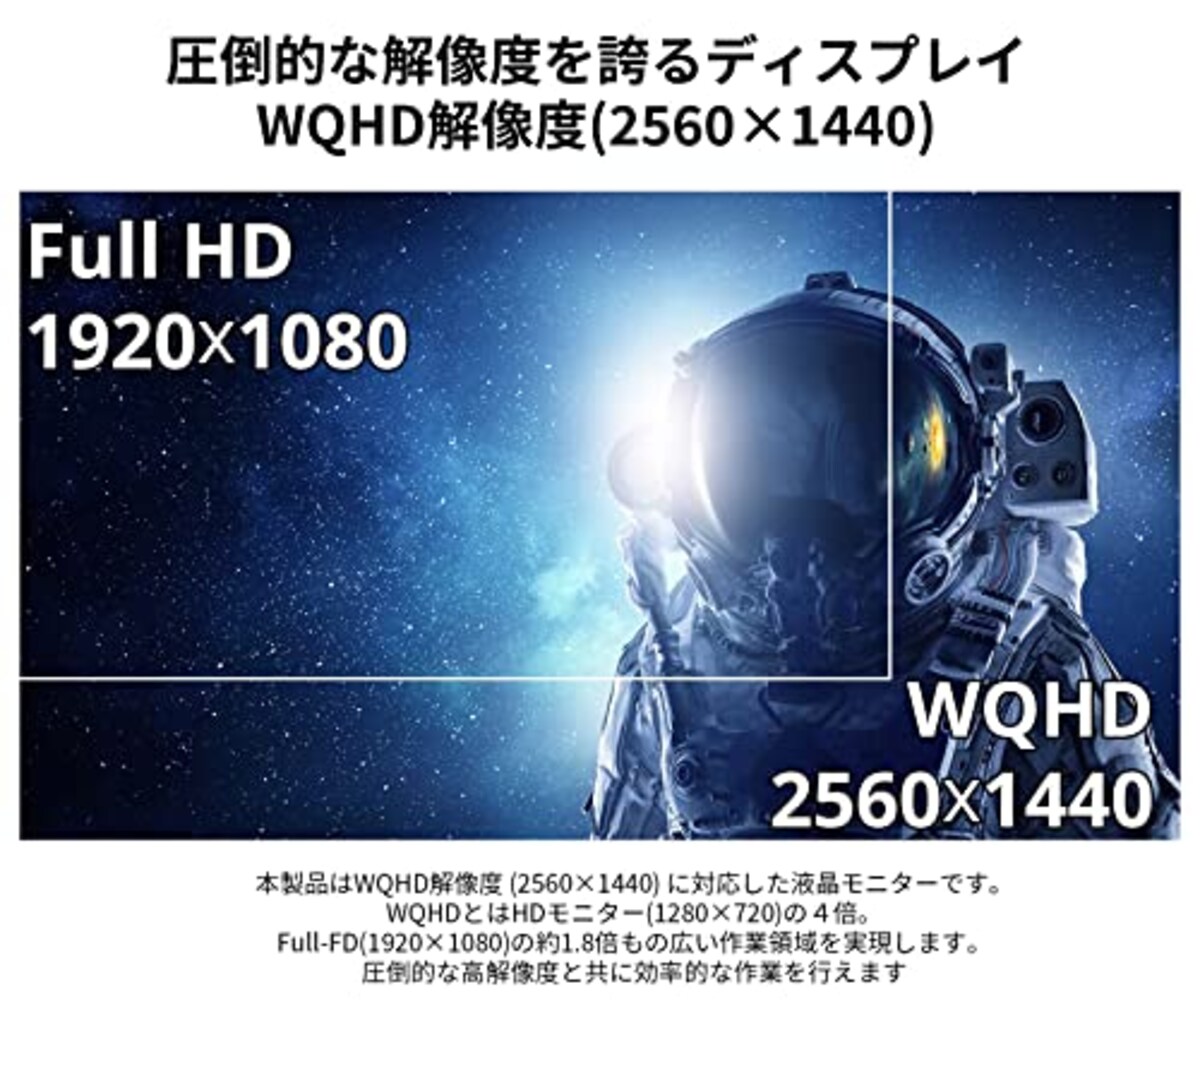  【Amazon.co.jp限定】JapanNext 31.5インチ WQHD解像度(2560x1440)165Hz対応ゲーミングモニター JN-V3150WQHDR165 HDMI DP画像2 